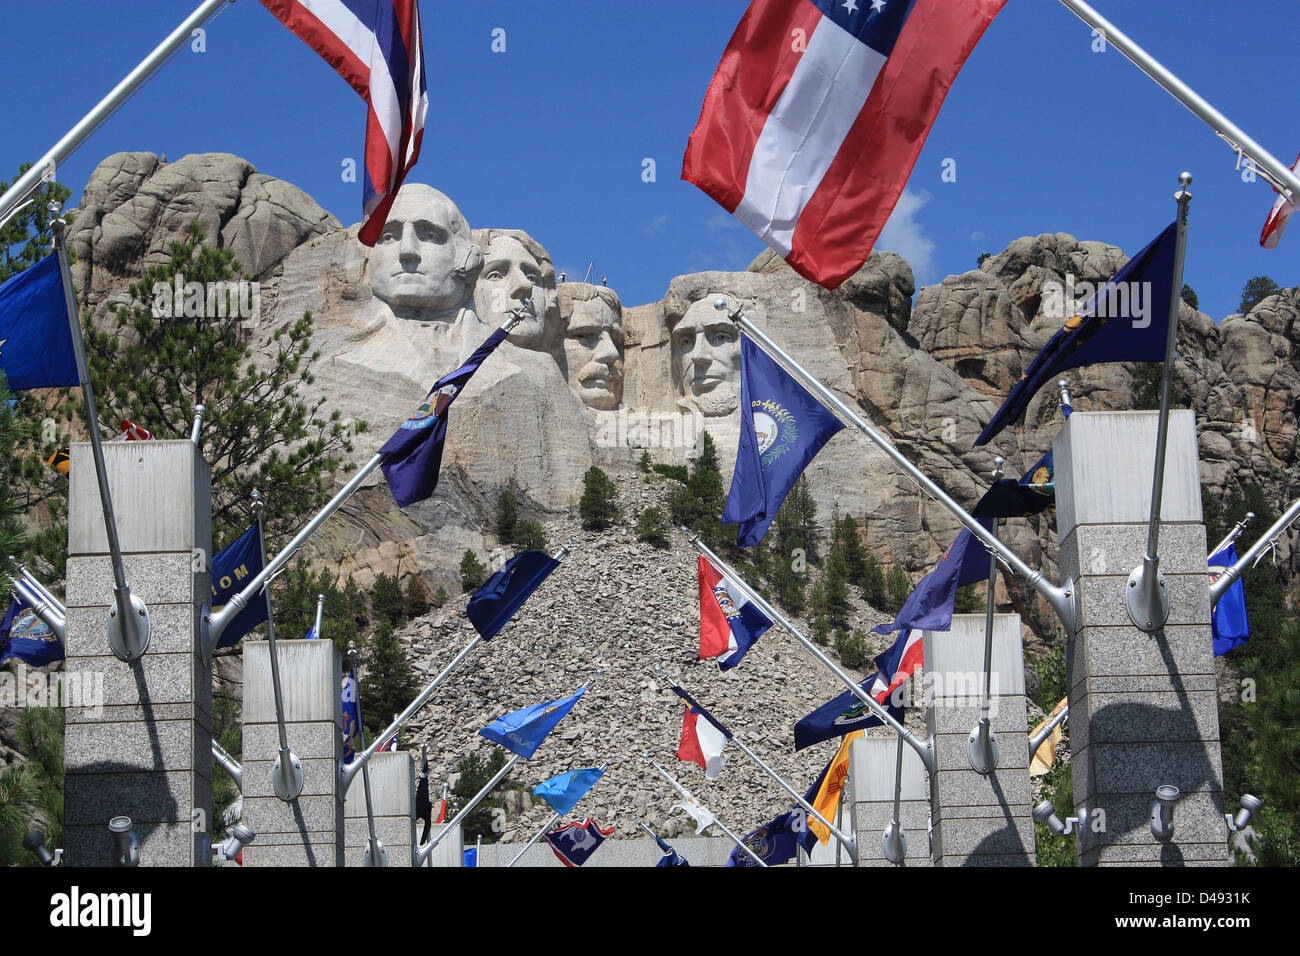 Le Mount Rushmore National Memorial, sculpture en granit , visage, Rushmore, Keystone, South Dakota, United States. Banque D'Images